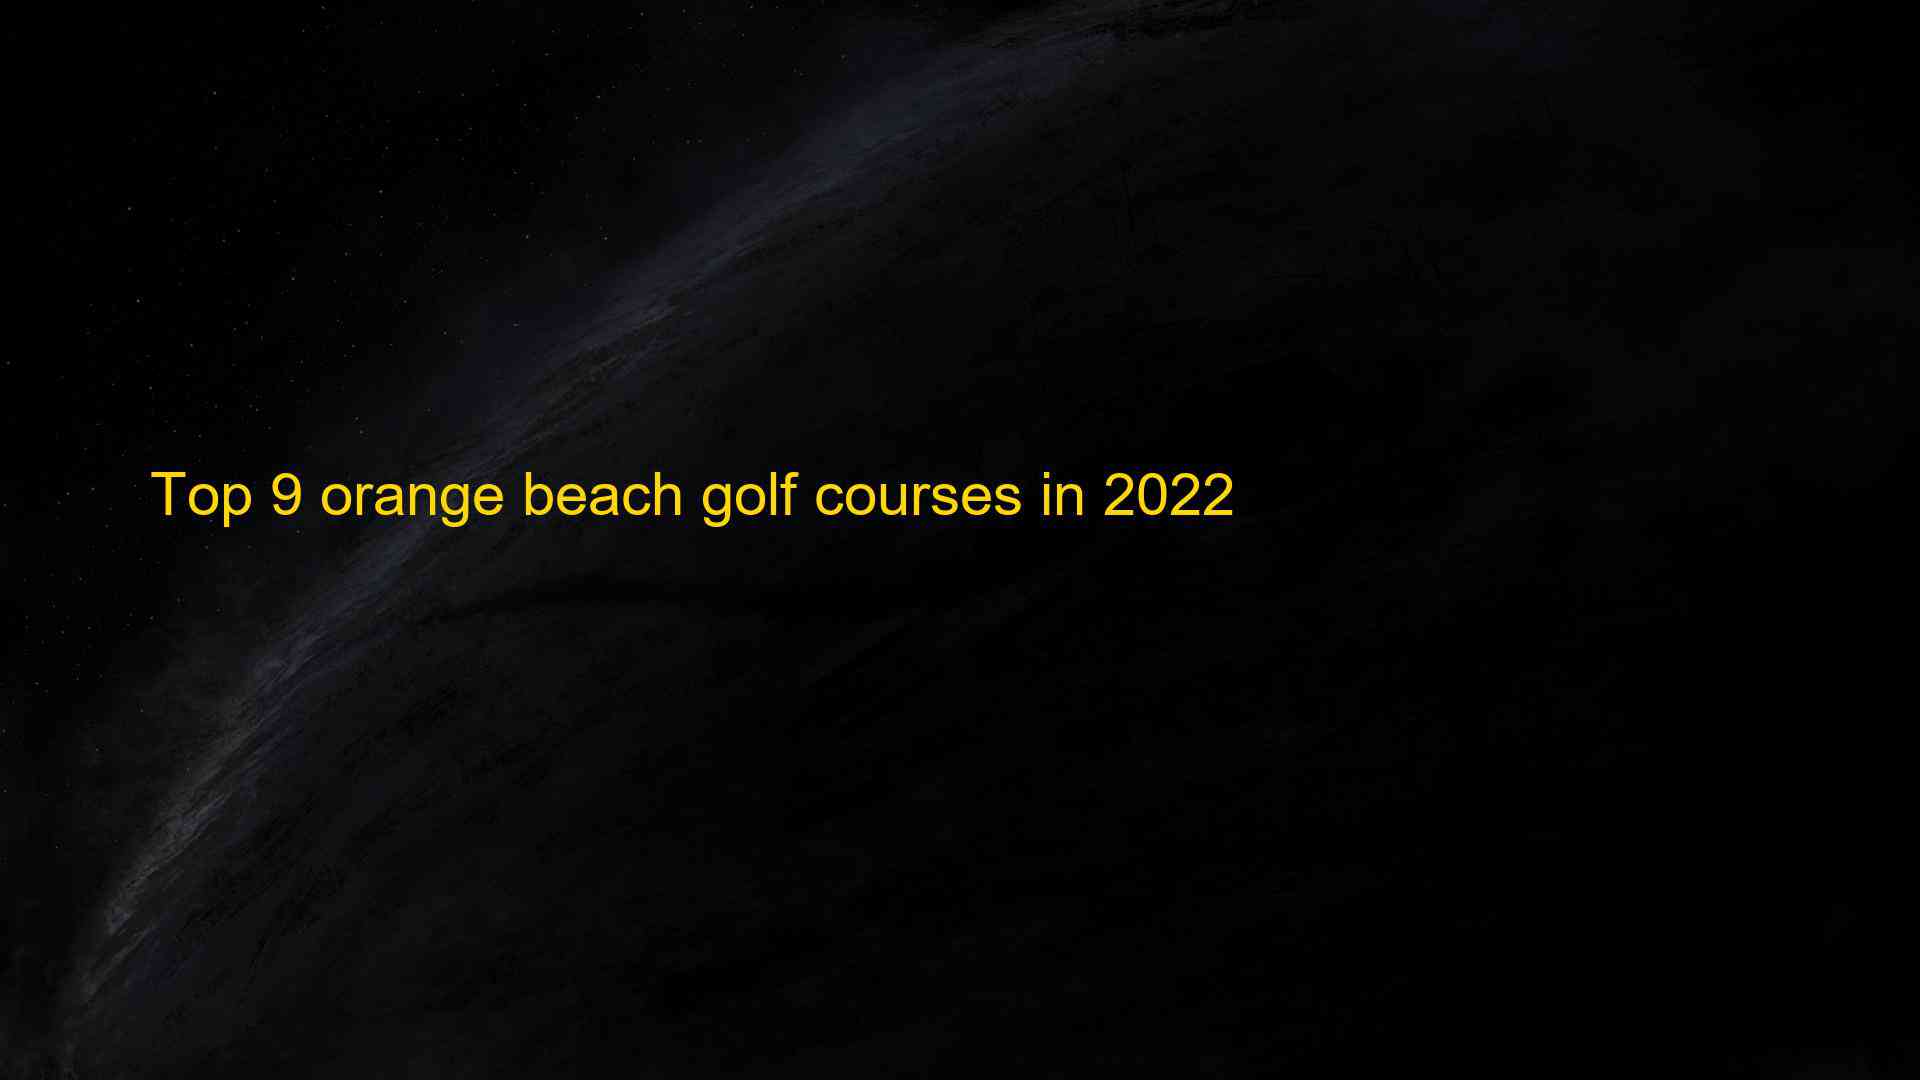 Top 9 orange beach golf courses in 2022 1660969480